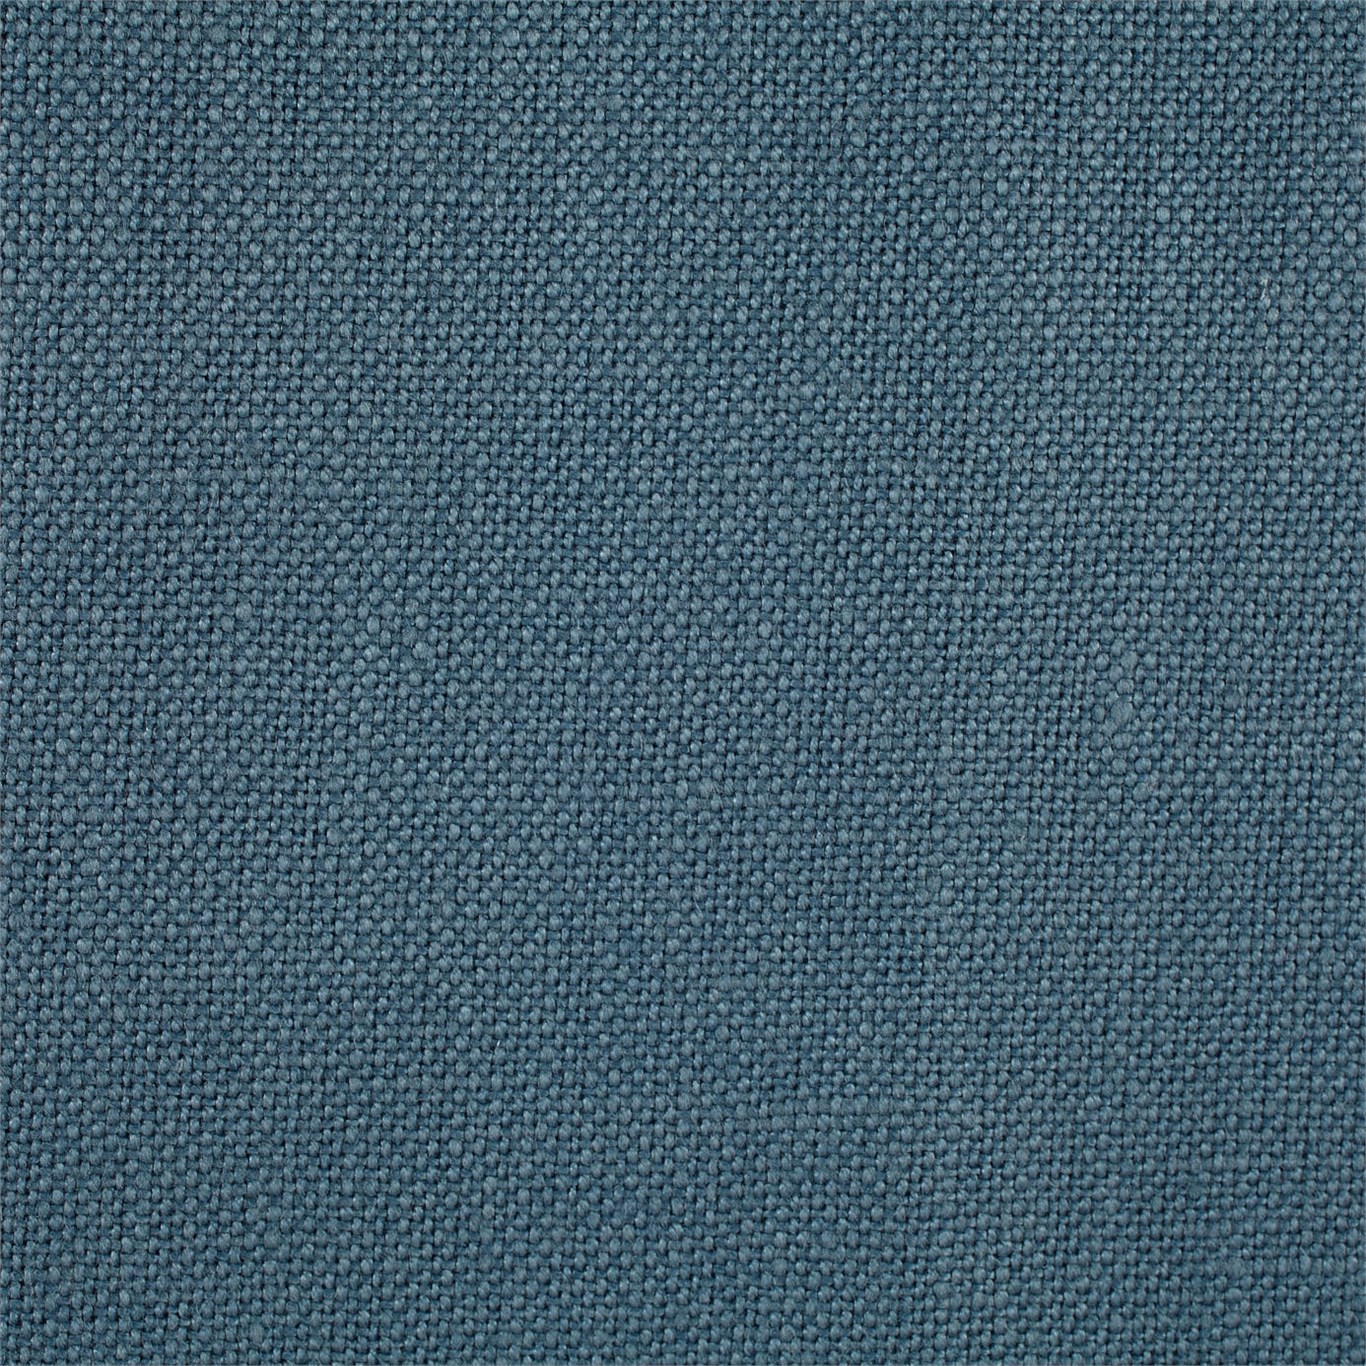 Malbec Teal Fabric by SAN